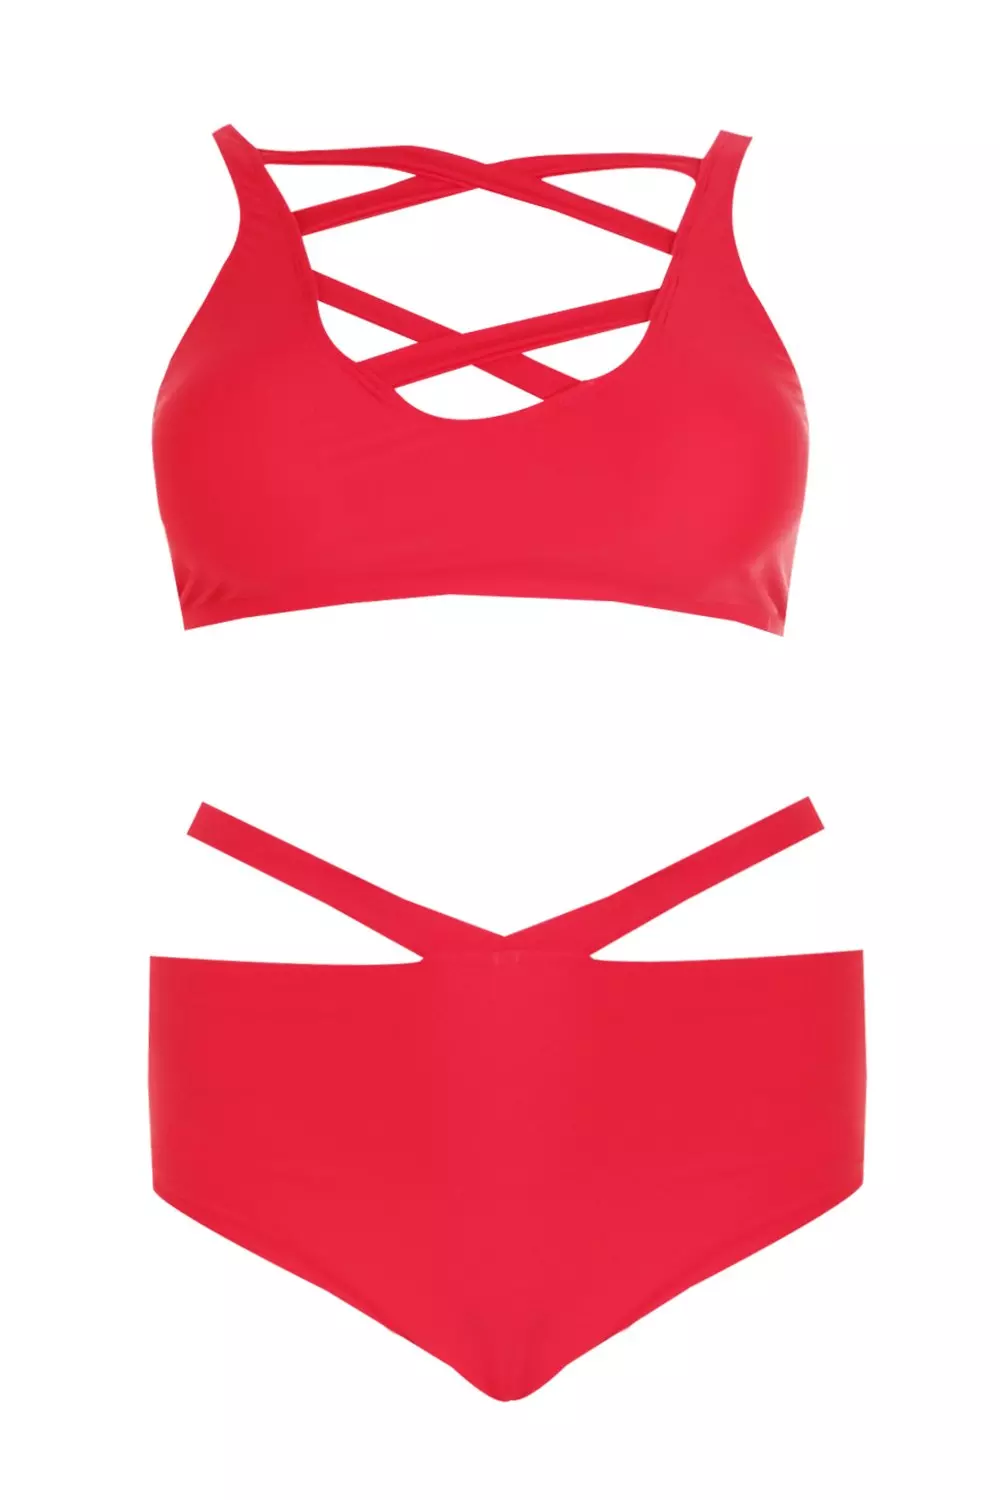 XZHGS Graphic Prints Winter Bikini 90% Polyester 10% Elastane Red Bodysuit  